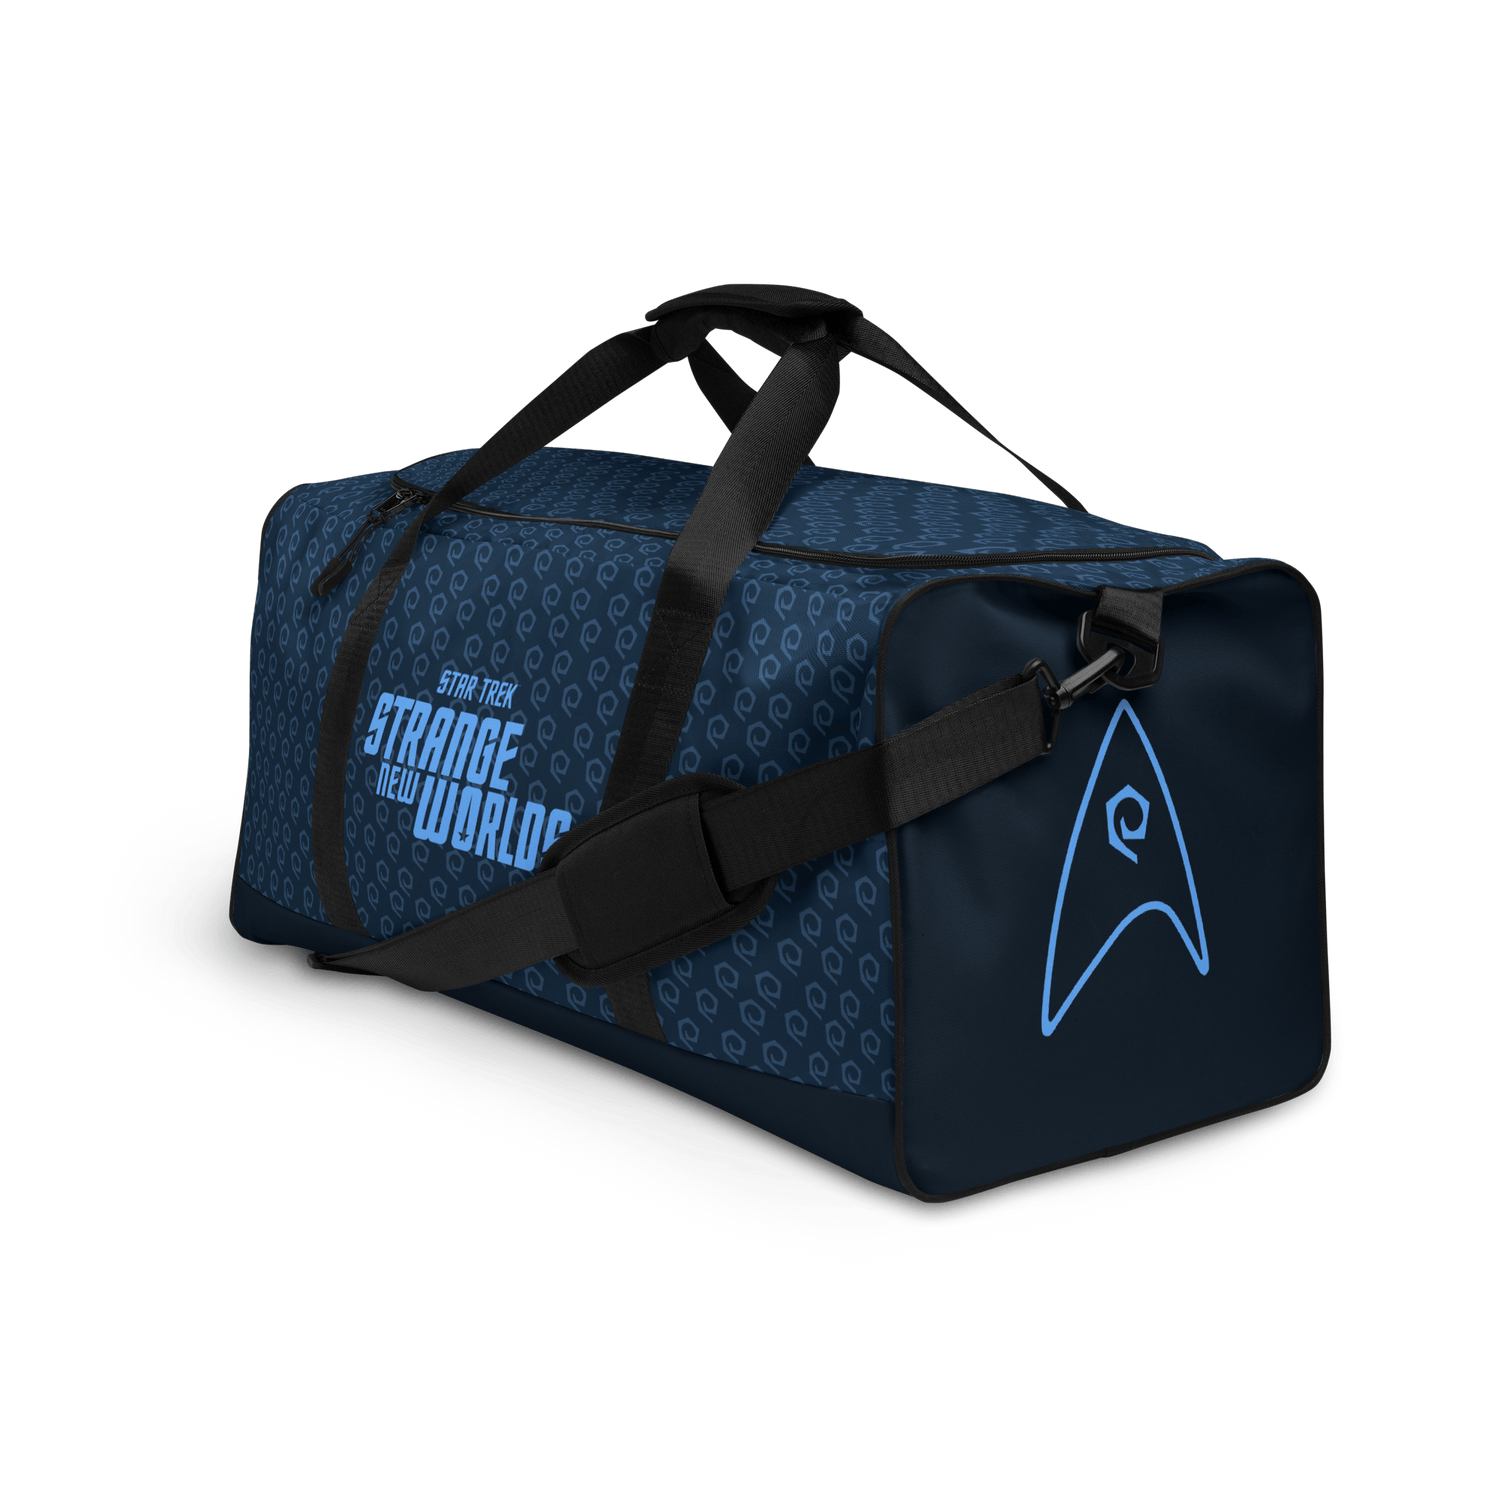 Star Trek: Strange New Worlds Engineering Duffle Bag - Paramount Shop